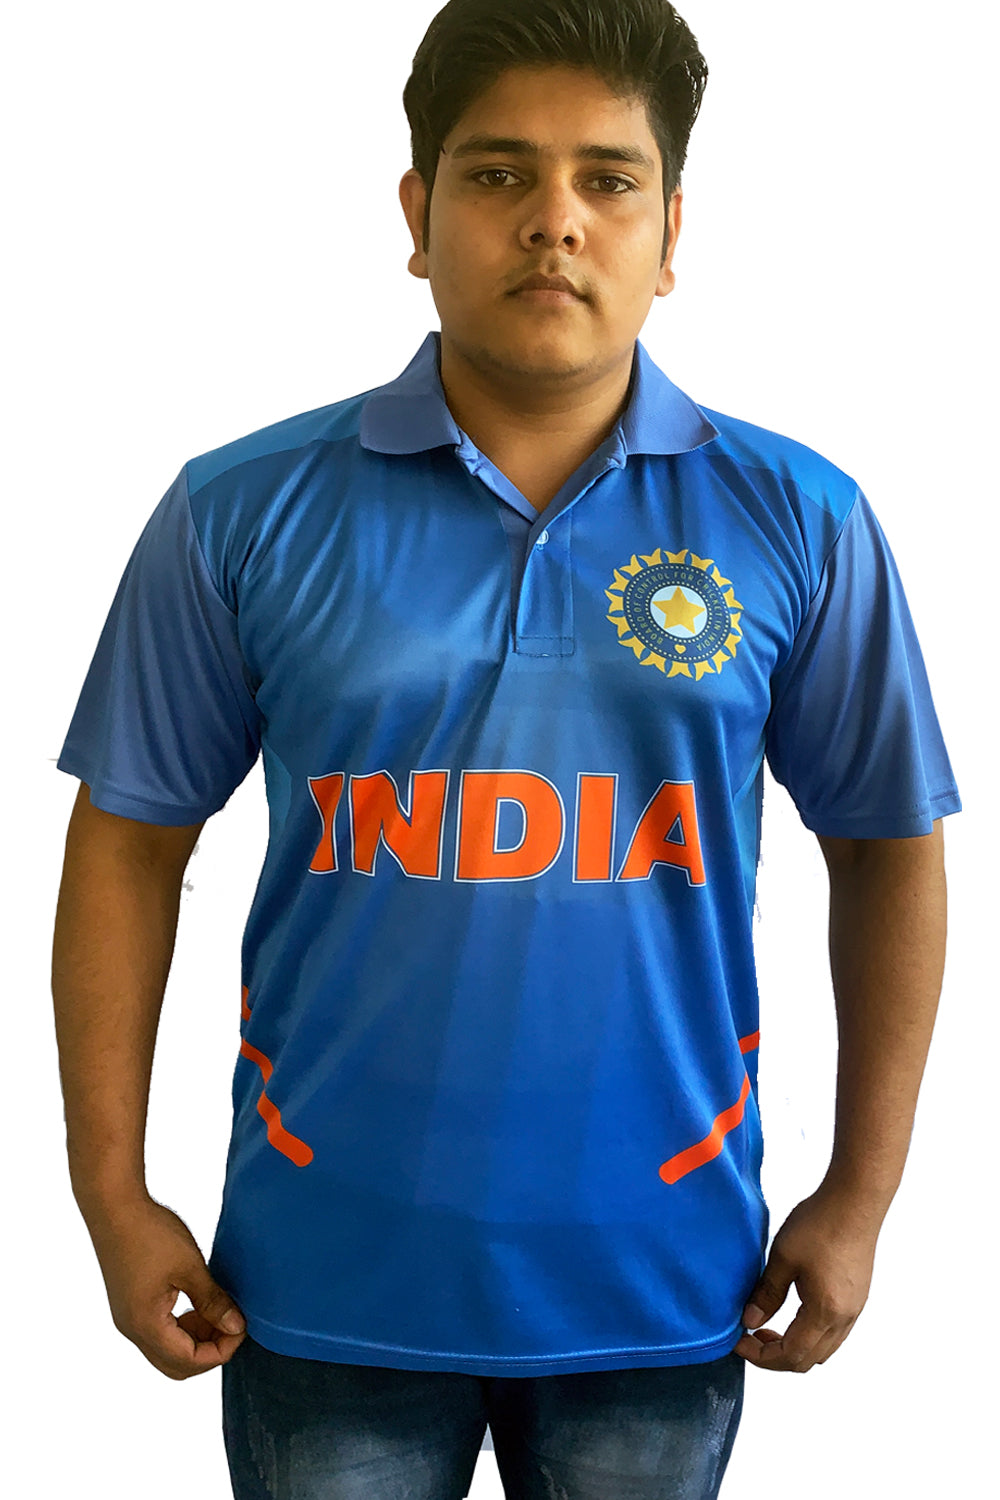 cricket printed jersey